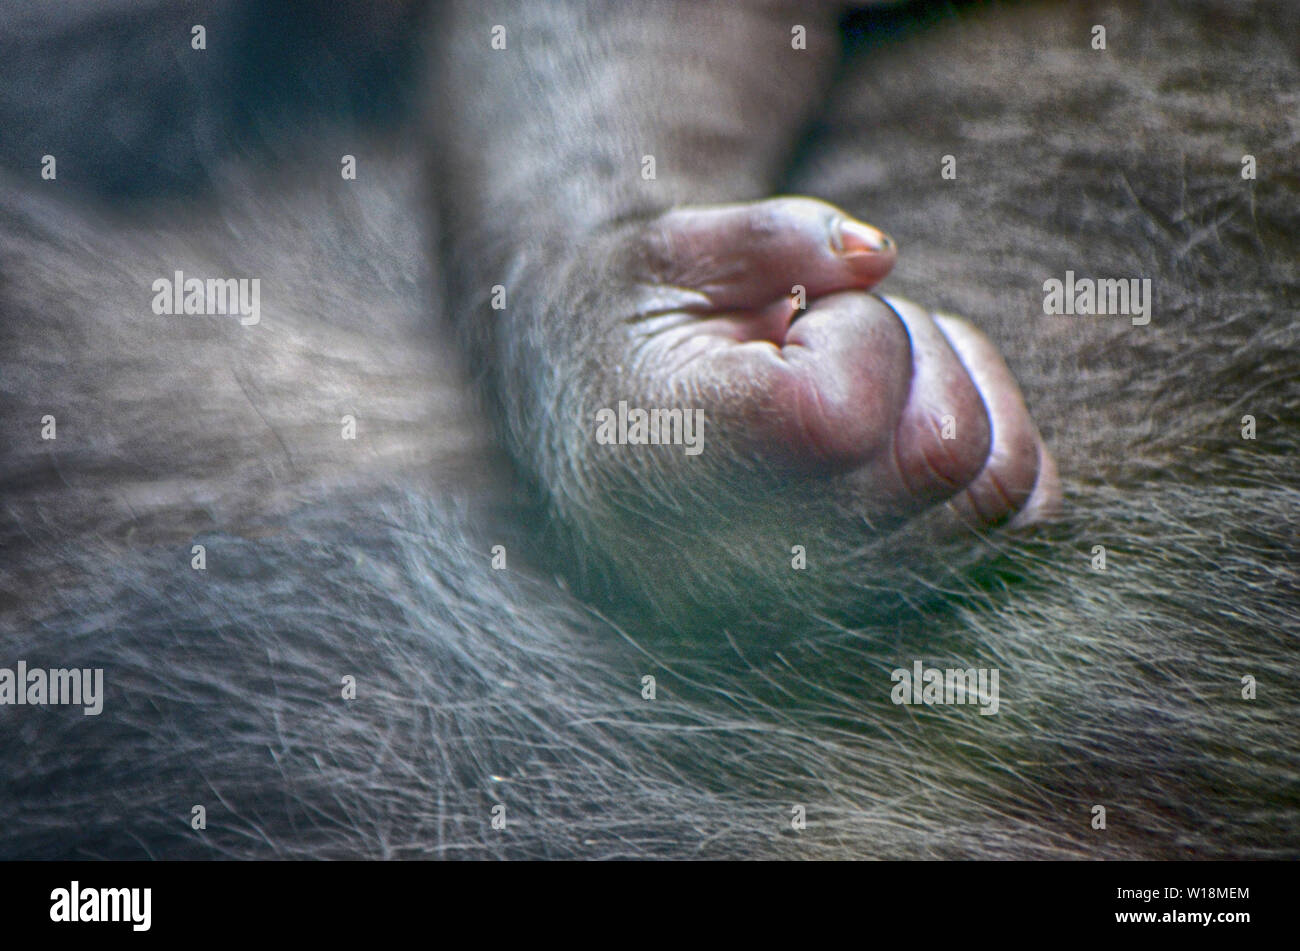 Baby monkey Hand Stockfoto